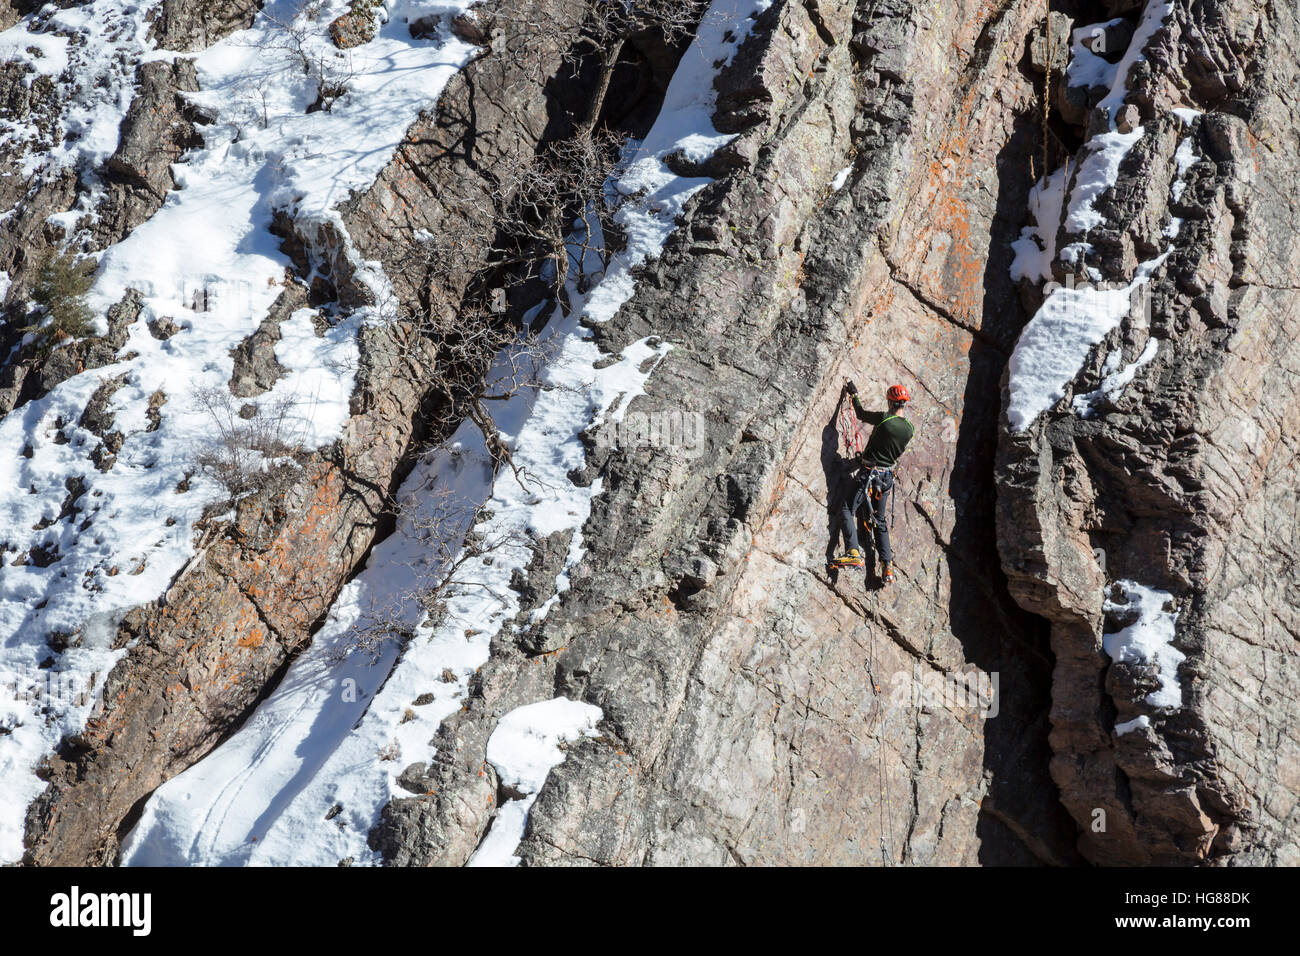 Ouray, Colorado - A climber on a rock wall in Ouray Ice Park. Stock Photo